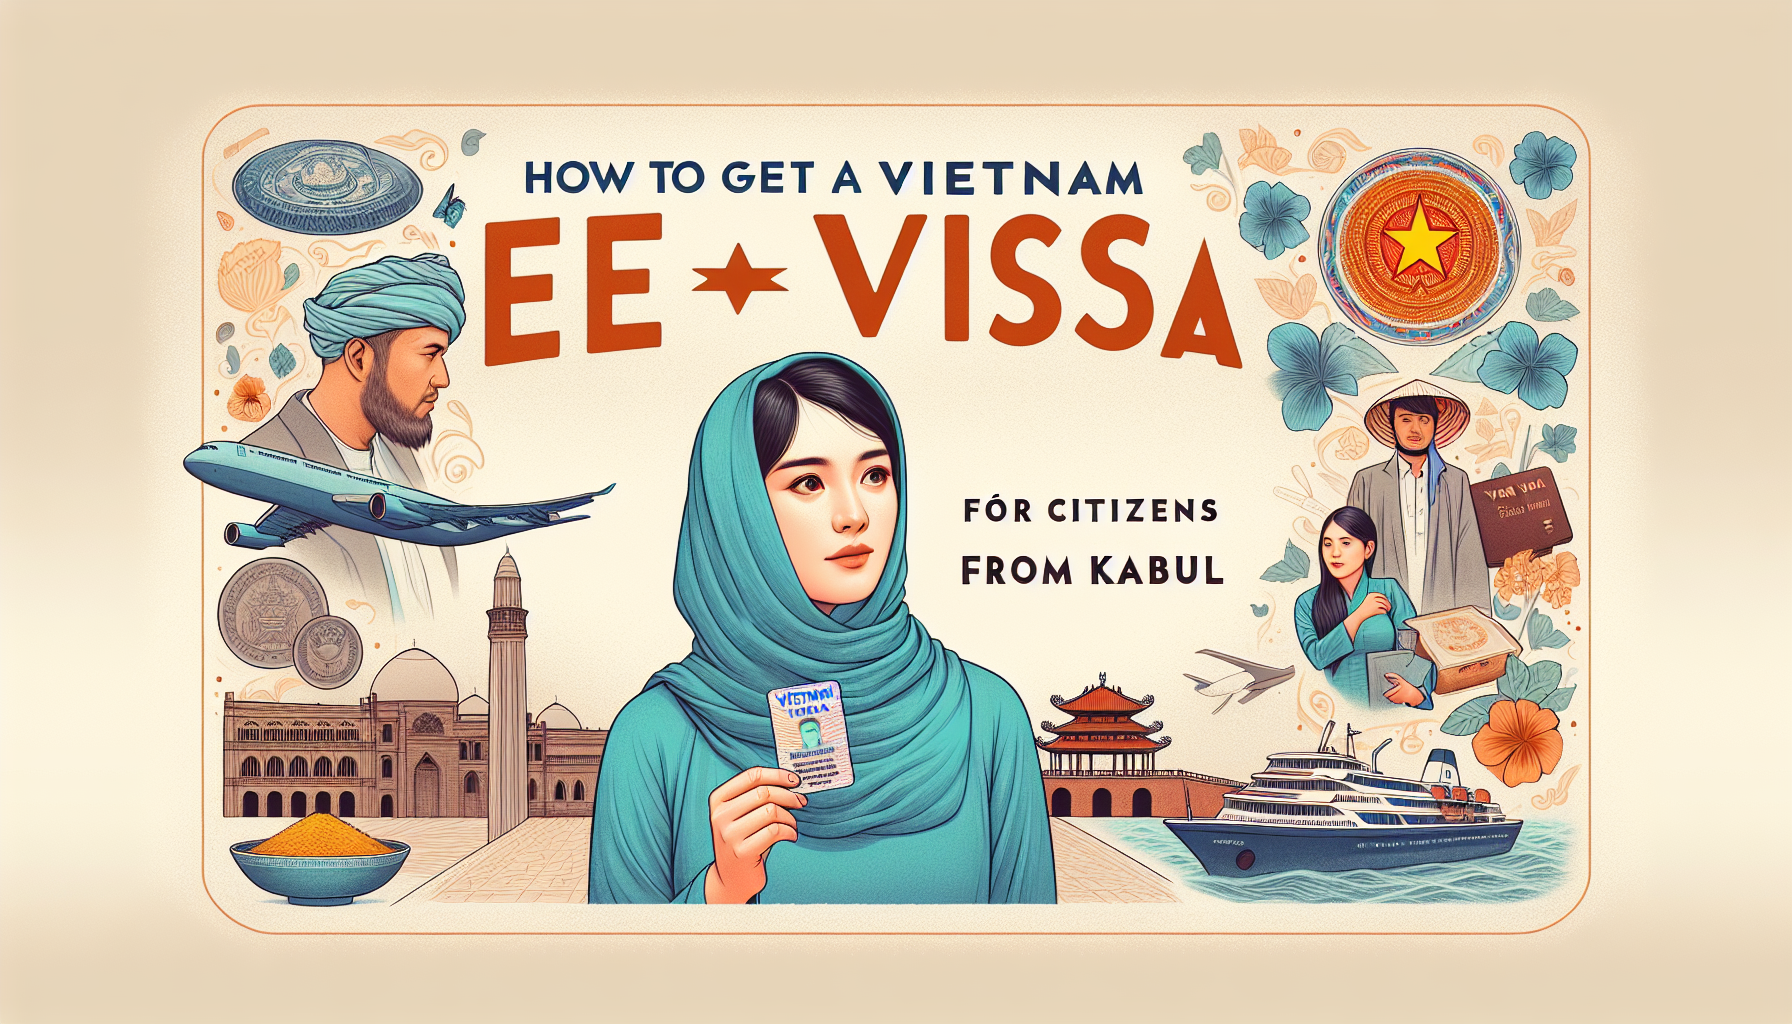 Vietnam Evisa for citizens from Kabul